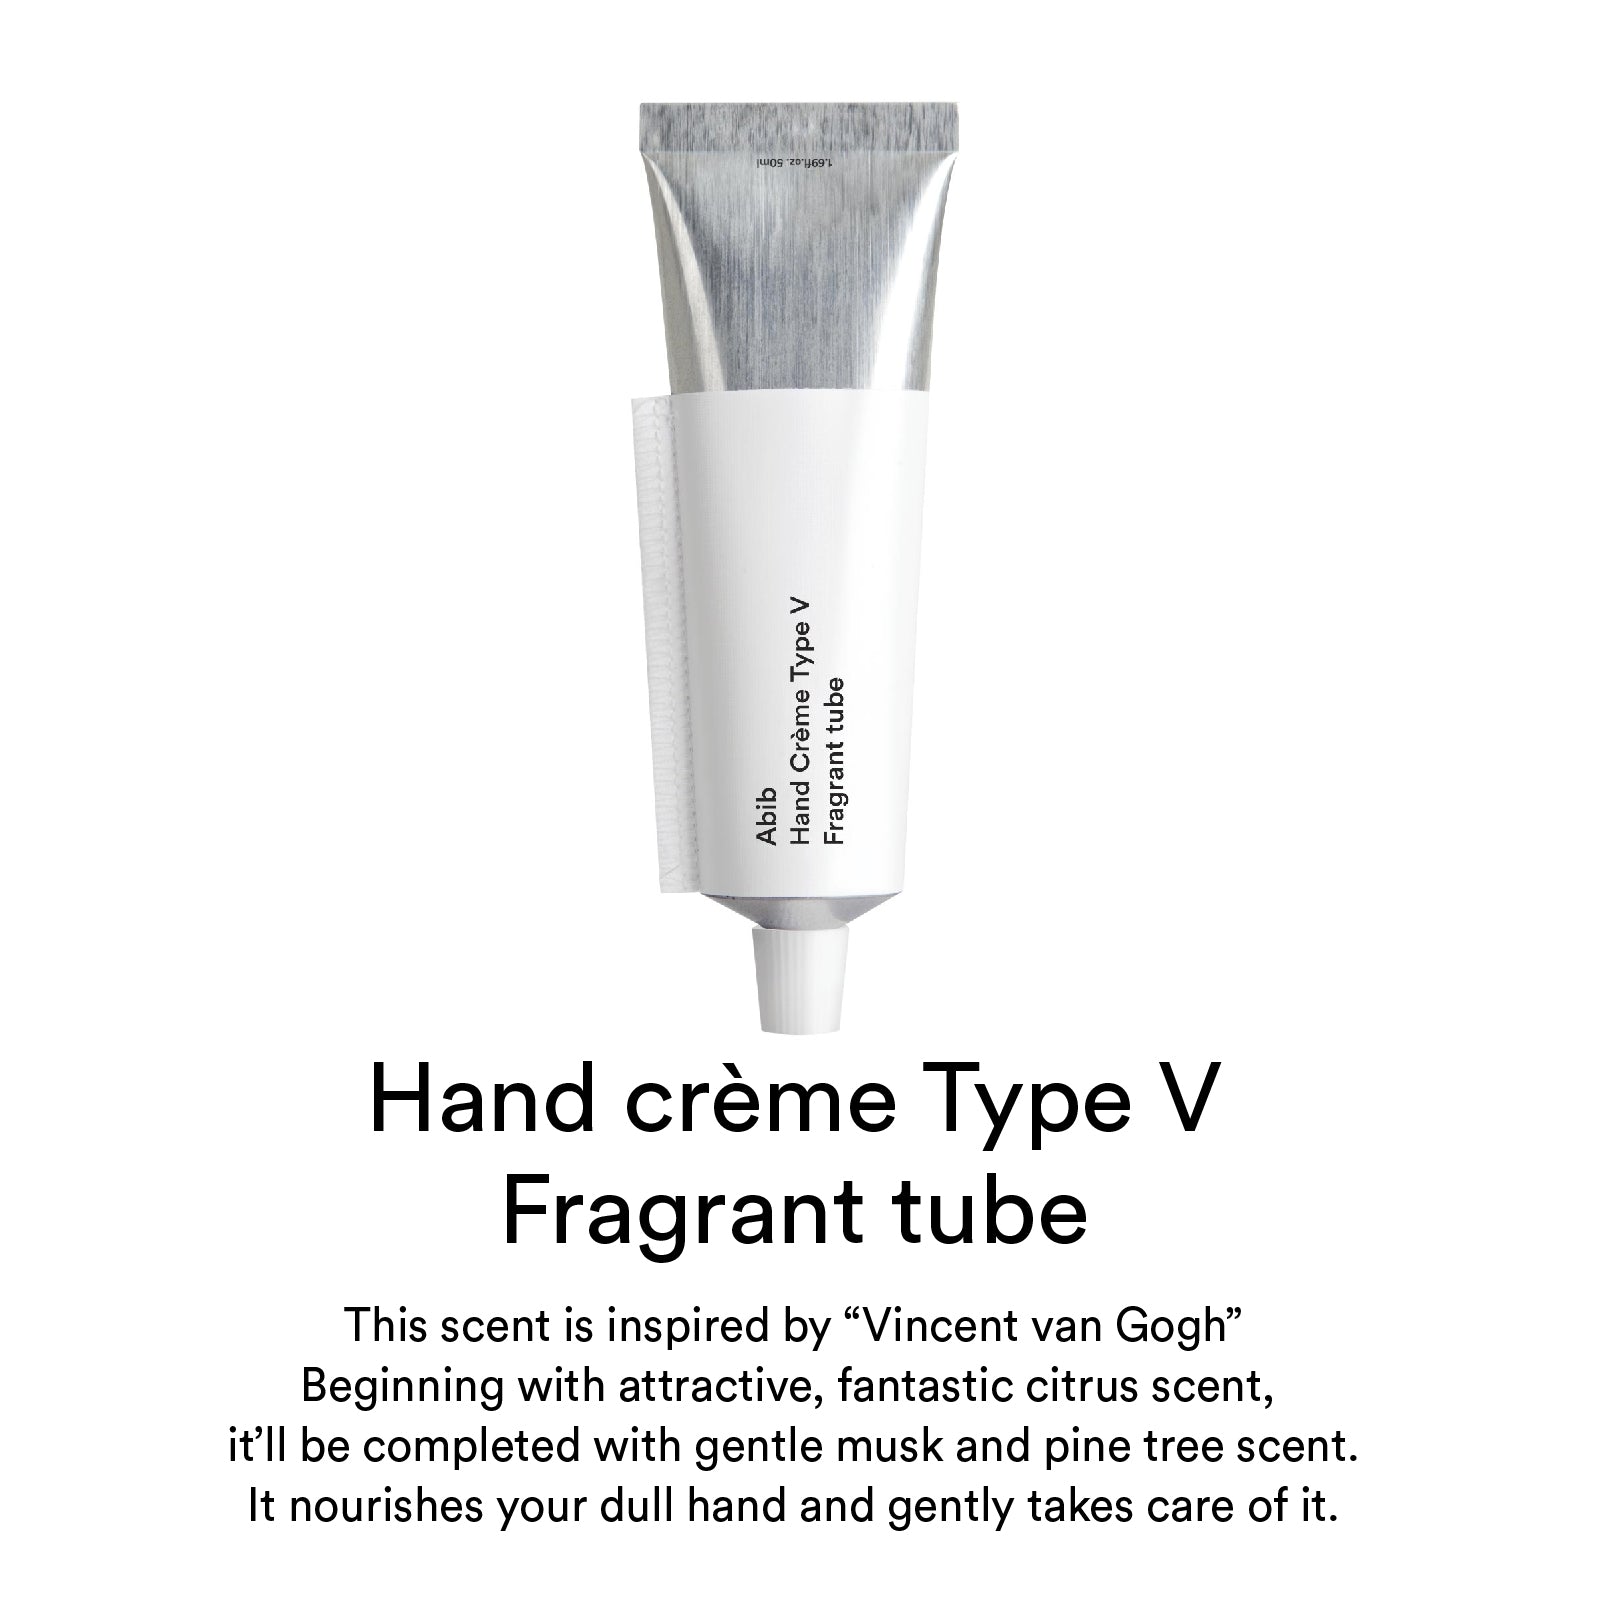 Fragrant tube